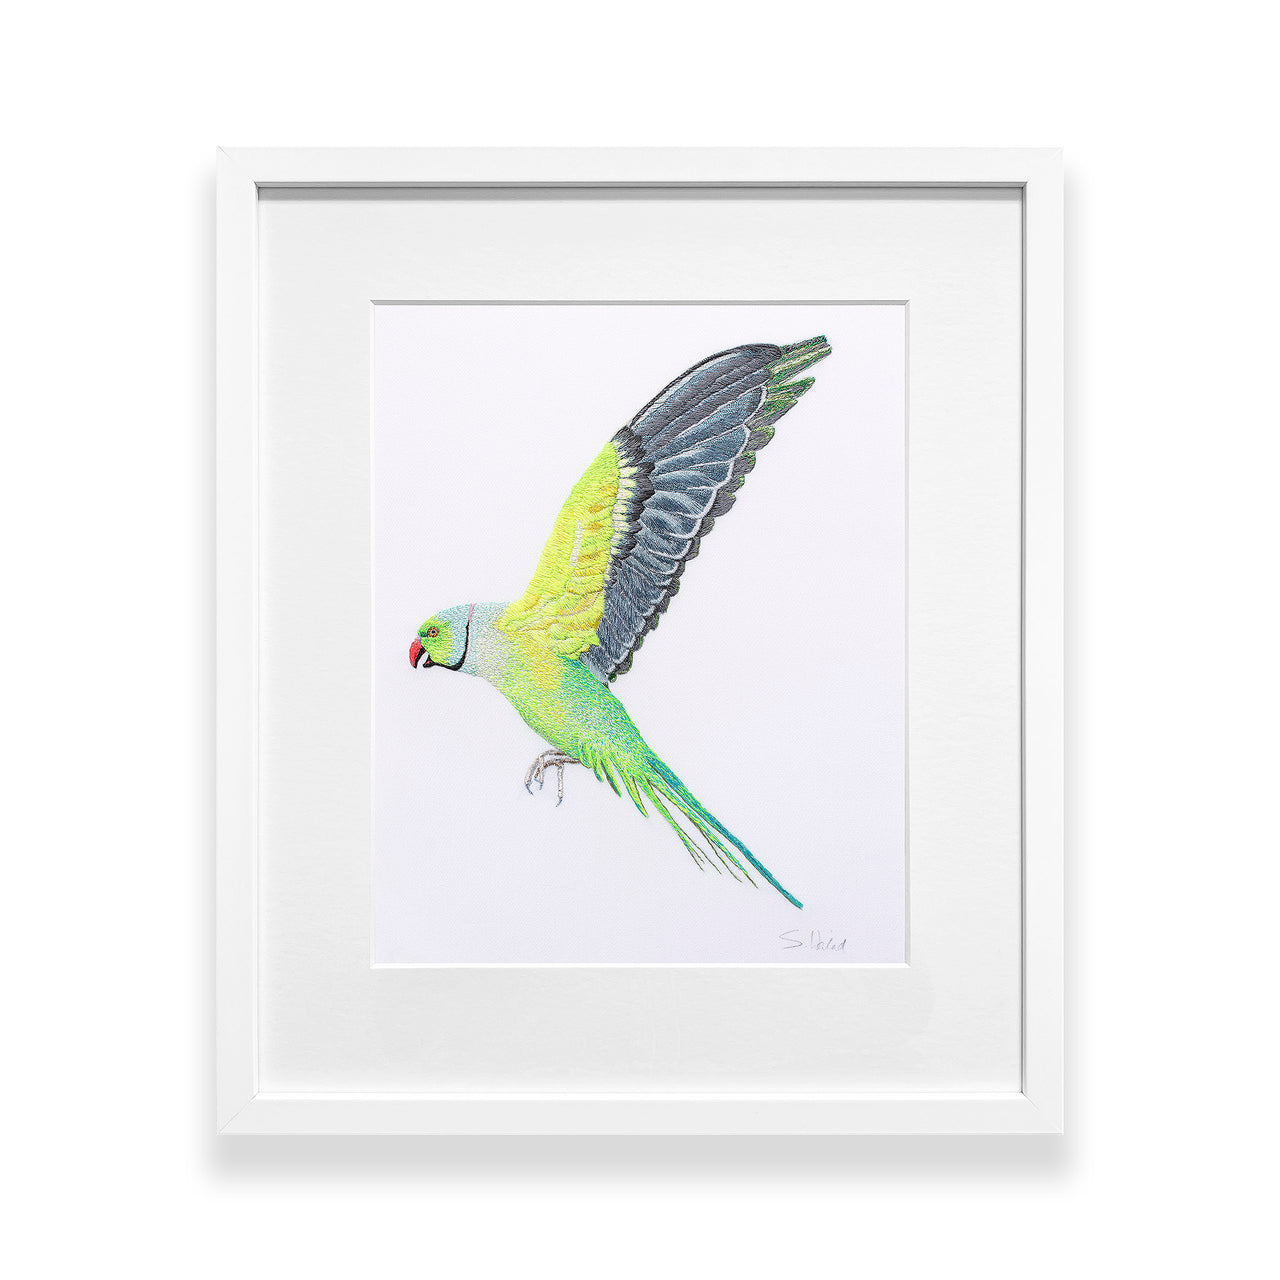 Flying parakeet hand embroidery original artwork in white frame